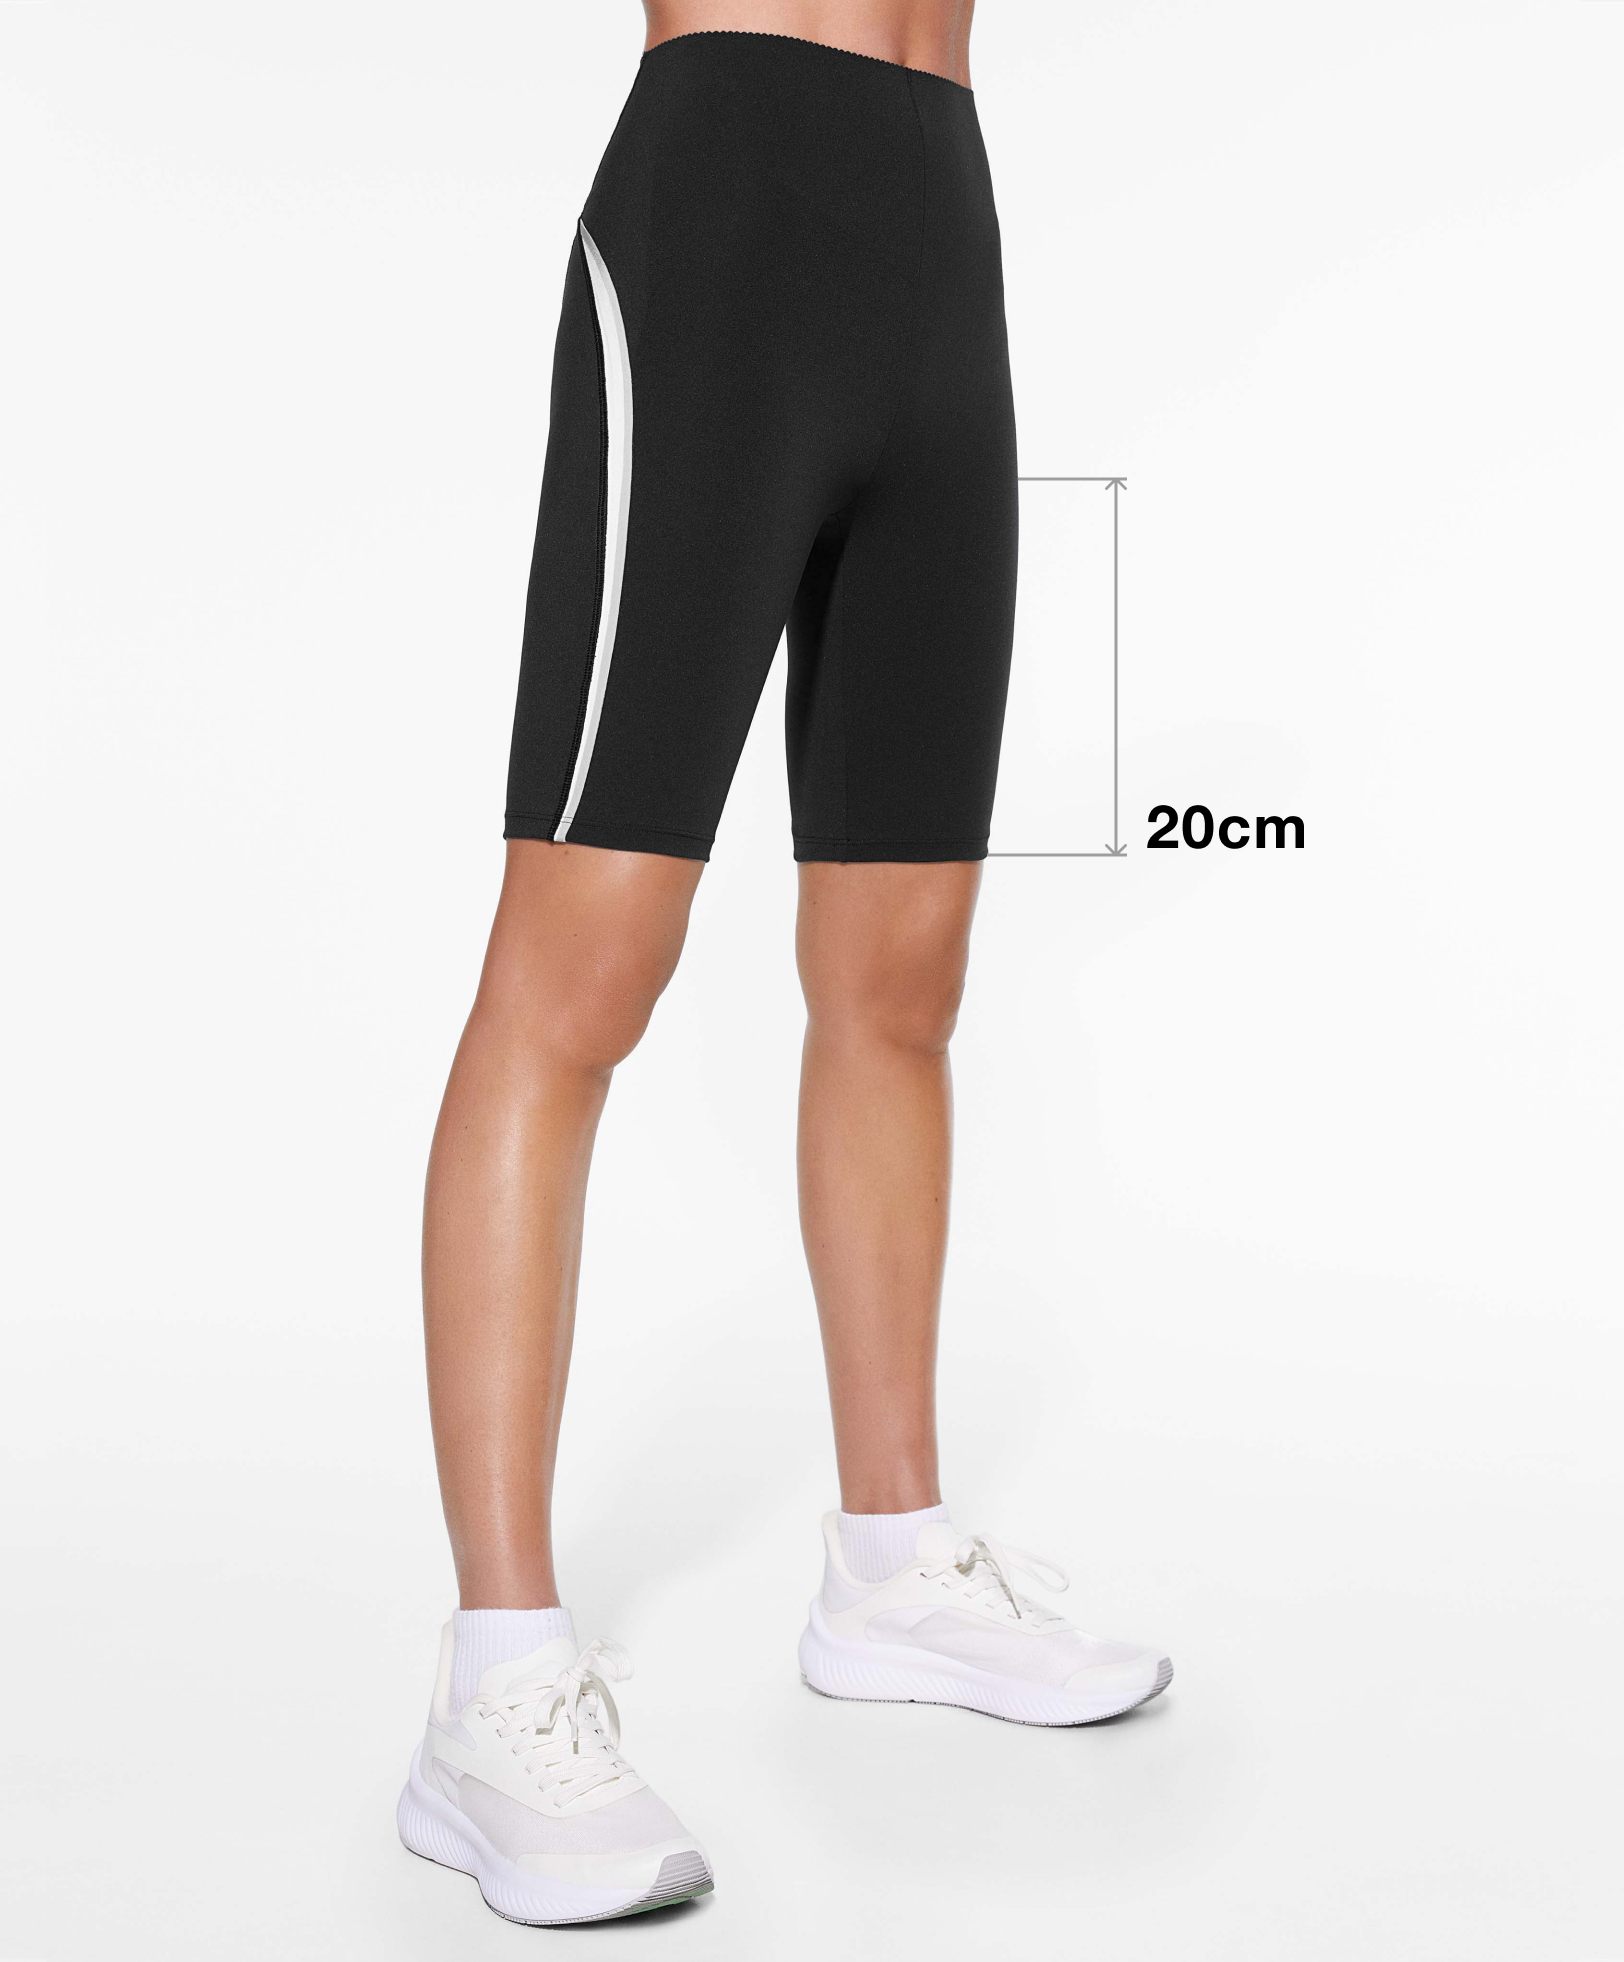 Compressive Raise Up 20cm cycle leggings